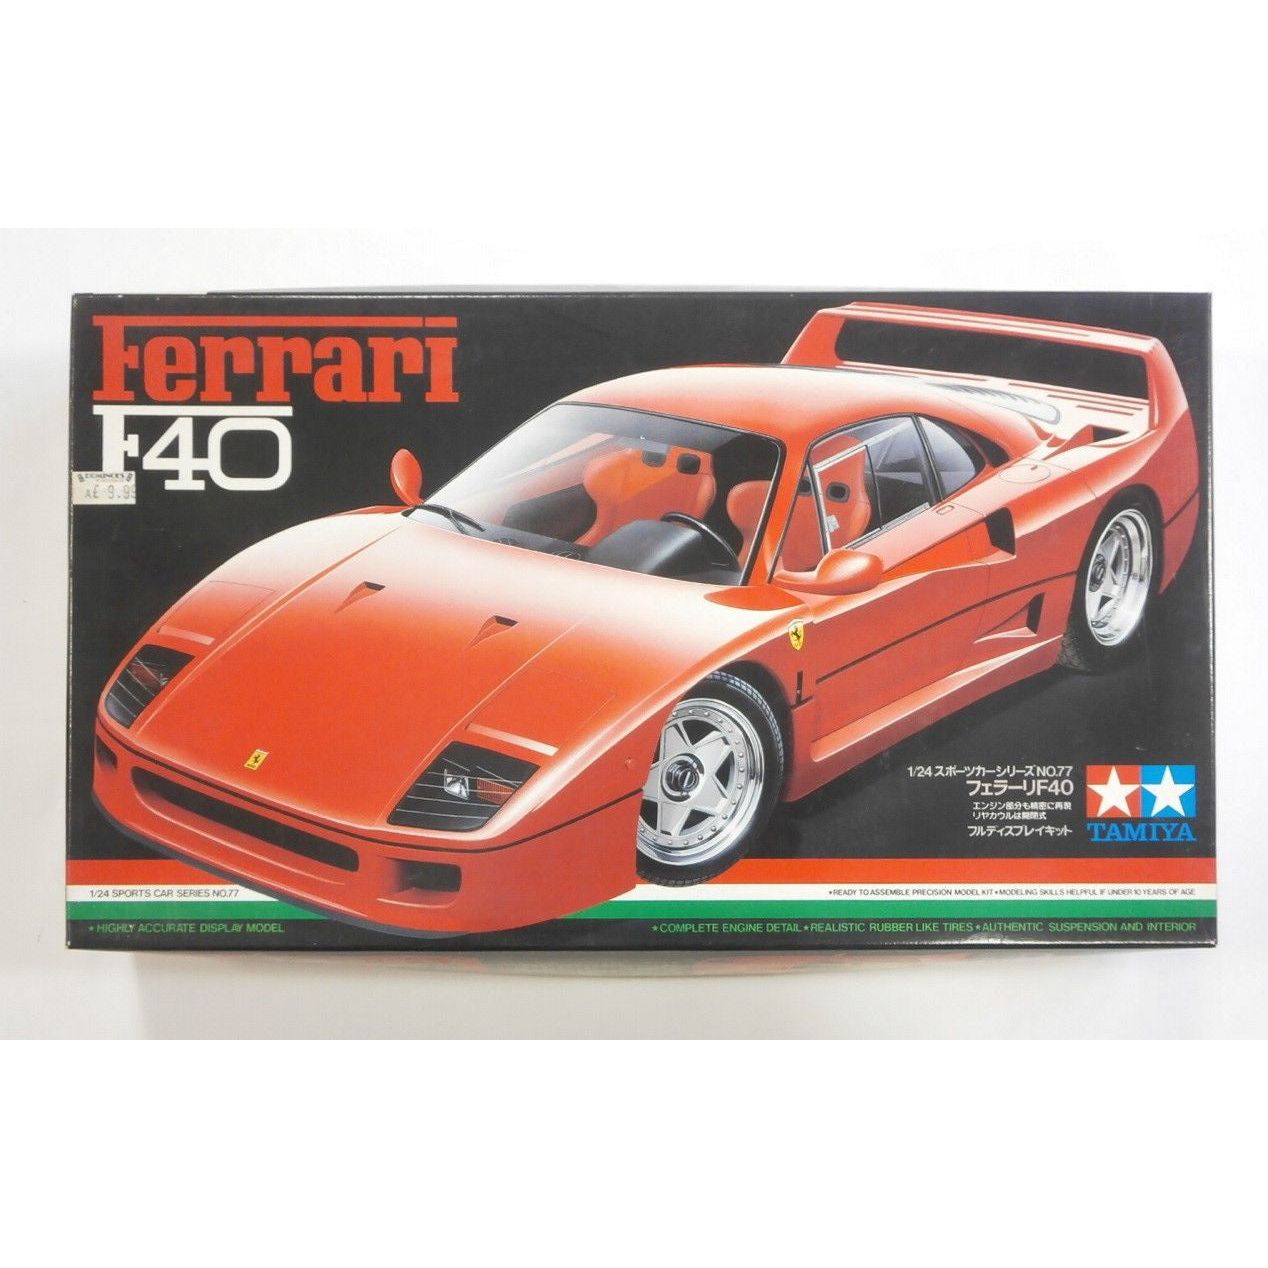 Ferrari F40 1/24 Model Car Kit #24077 by Tamiya